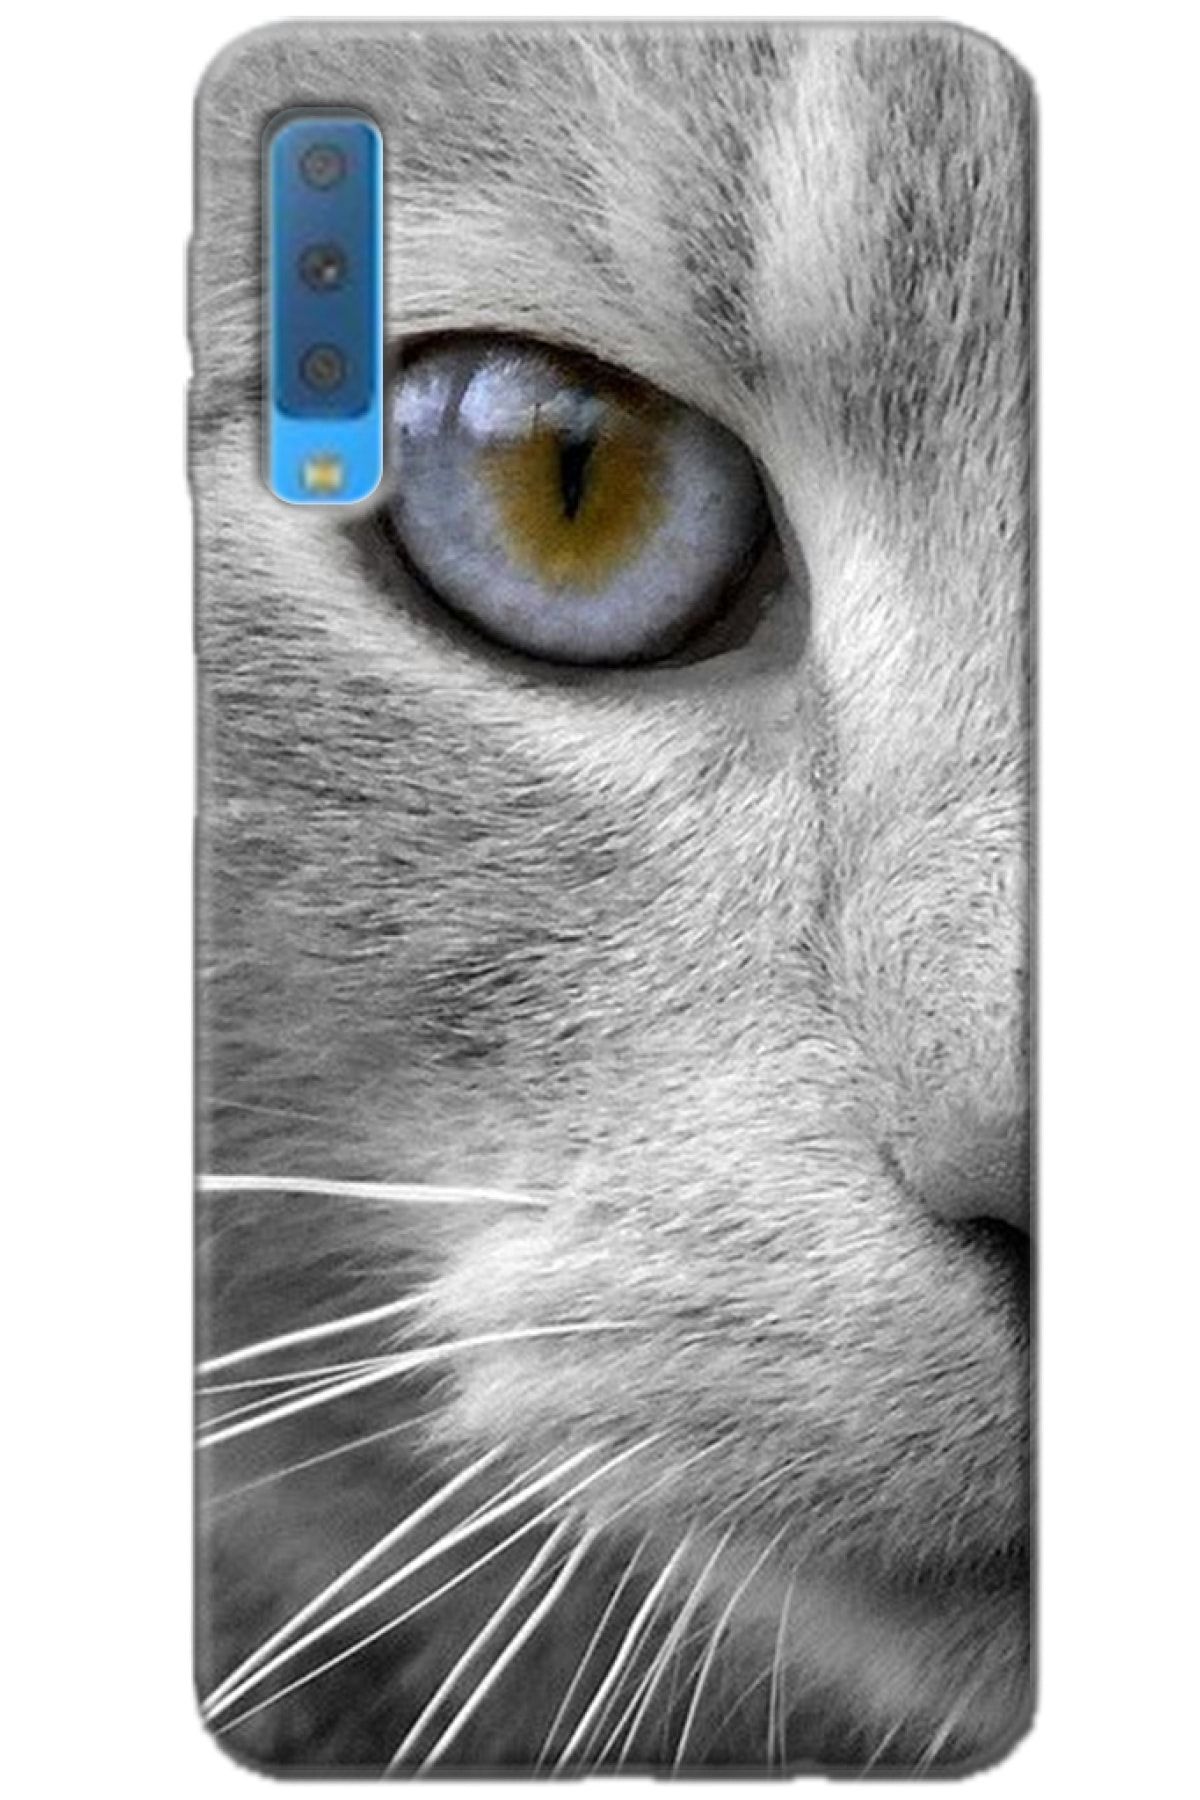 Noprin Samsung Galaxy A7 2018 Kılıf Silikon Baskılı Desenli Arka Kapak